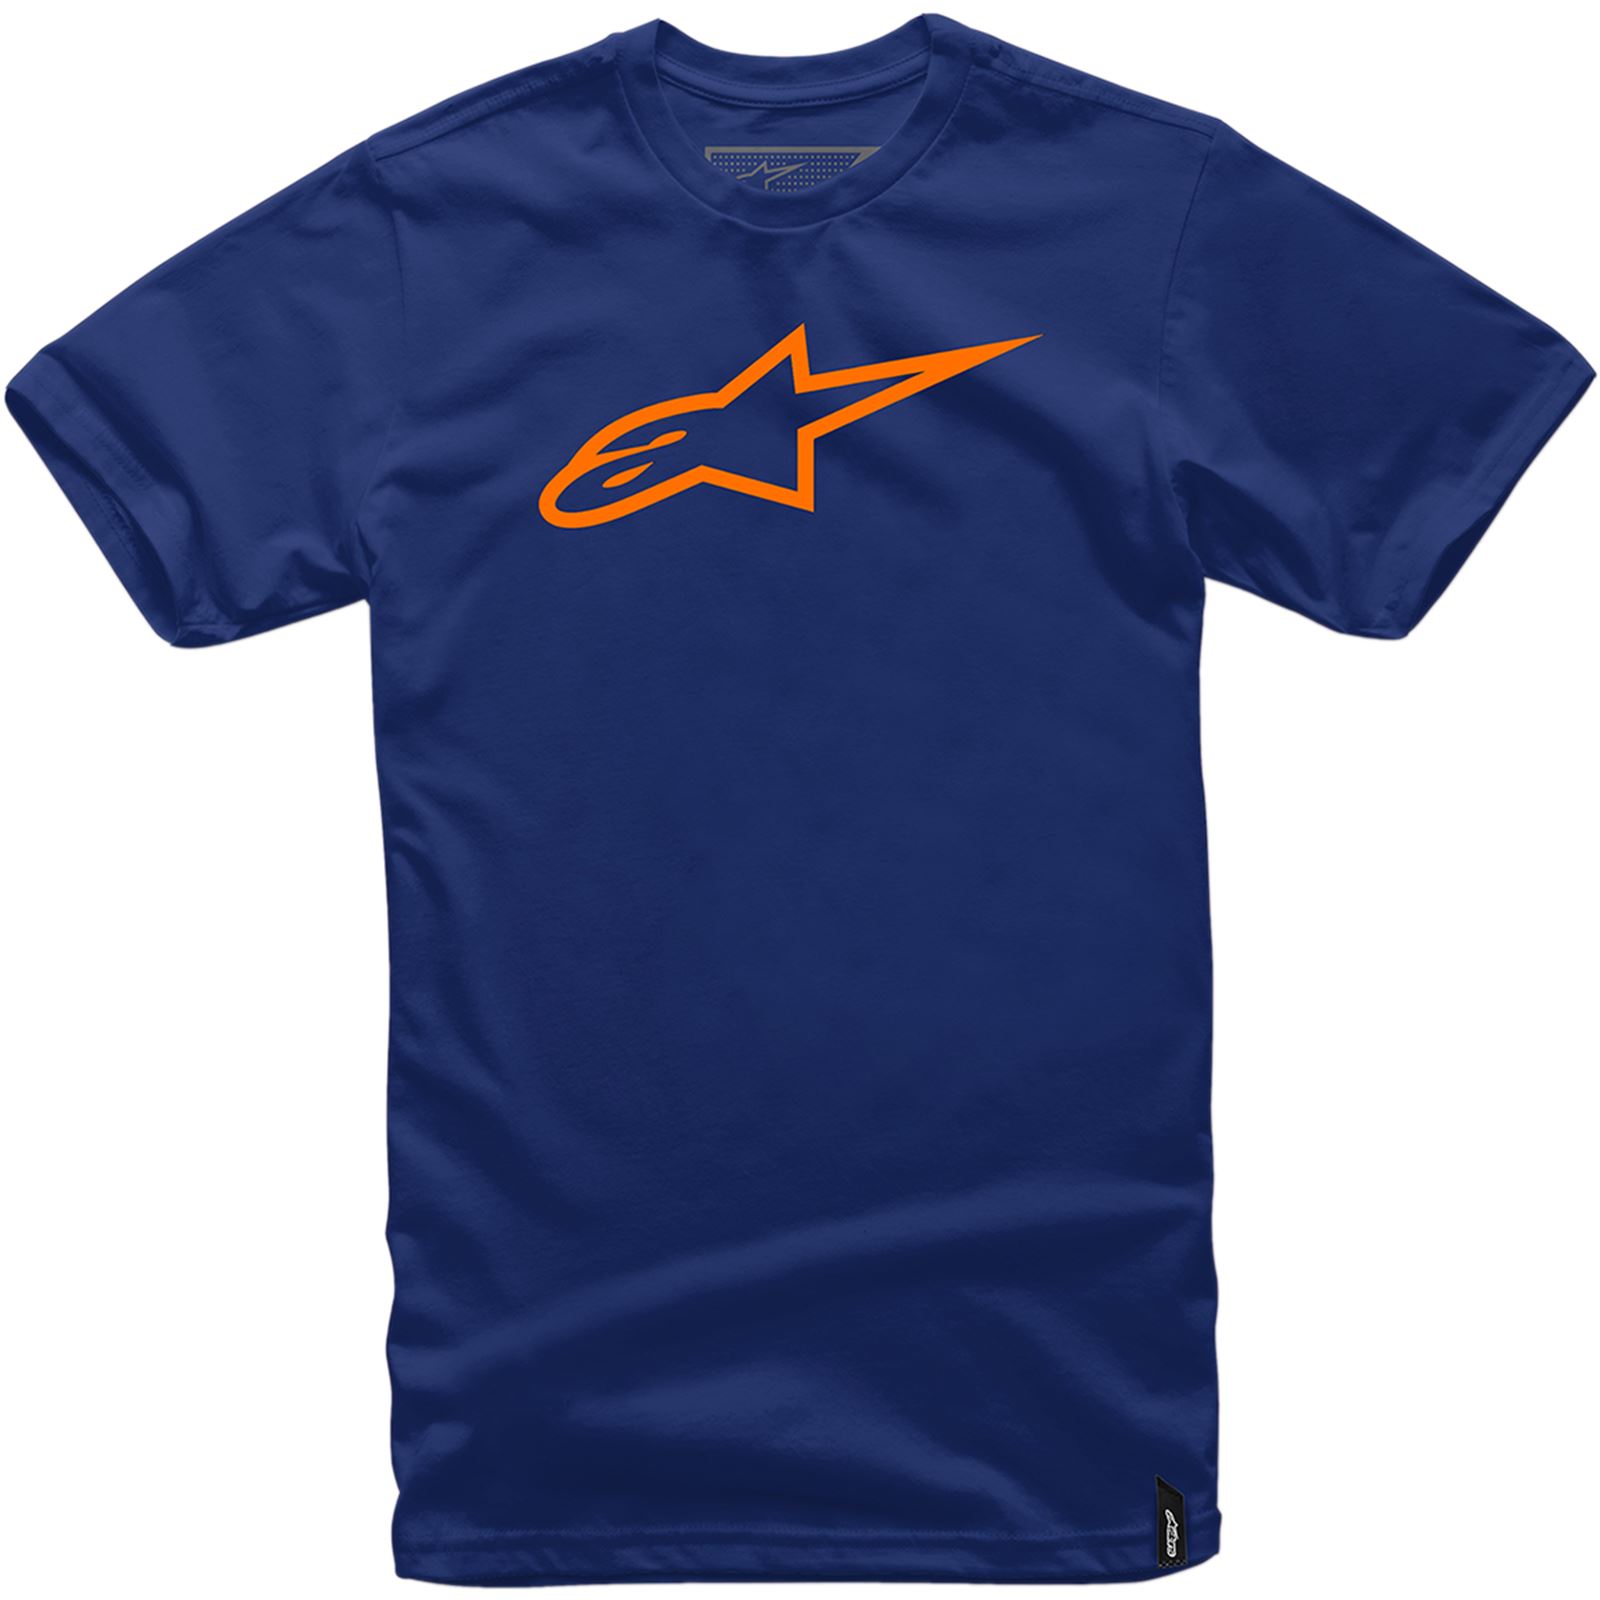 Alpinestars Ageless T-Shirt - Navy/Orange - X-Large